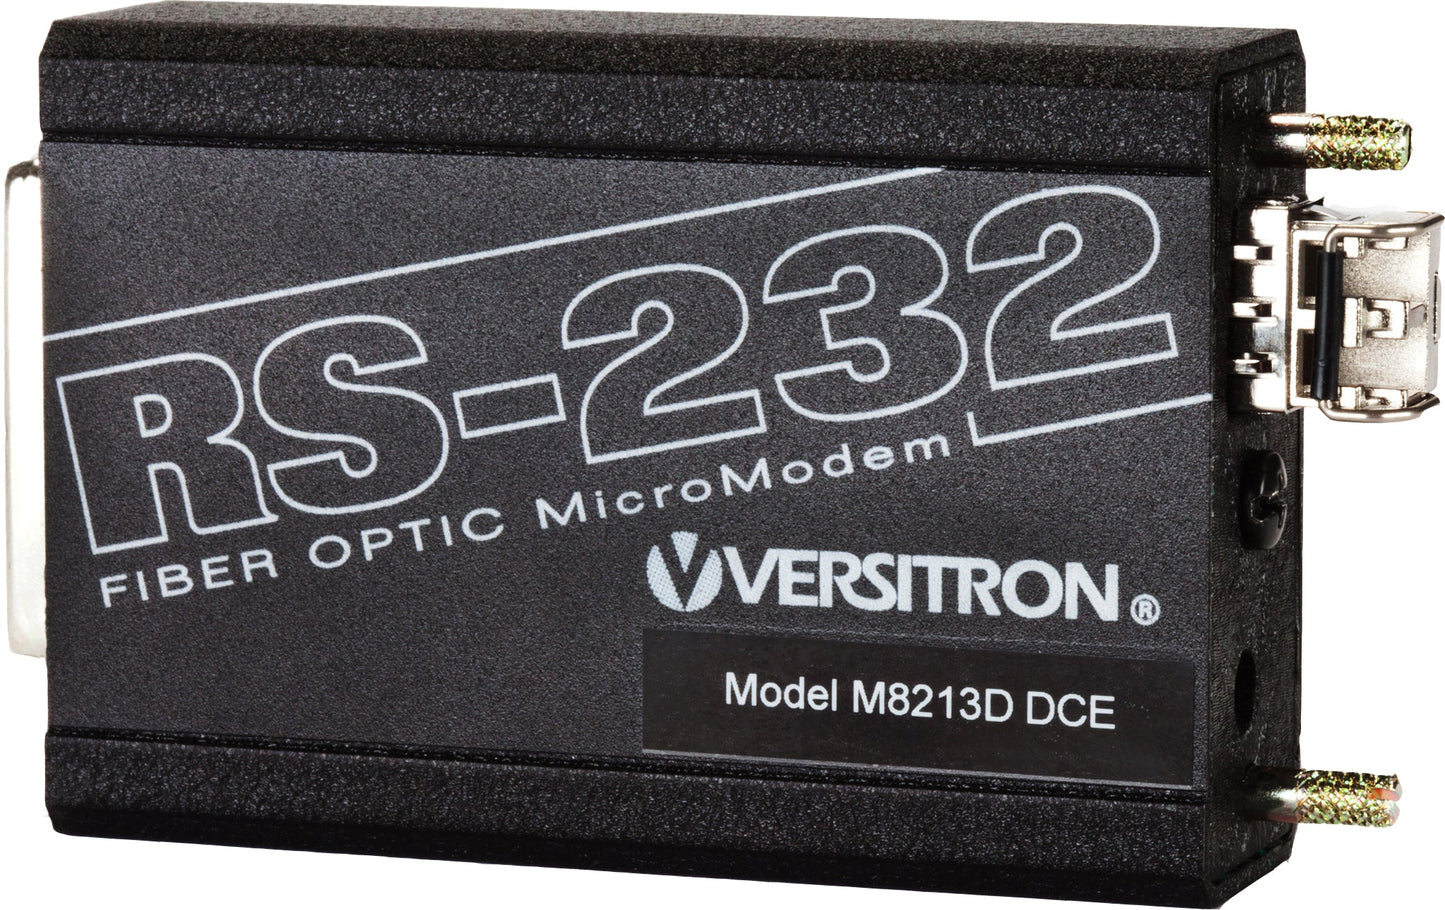 RS-232 Fiber Optic Micromodem